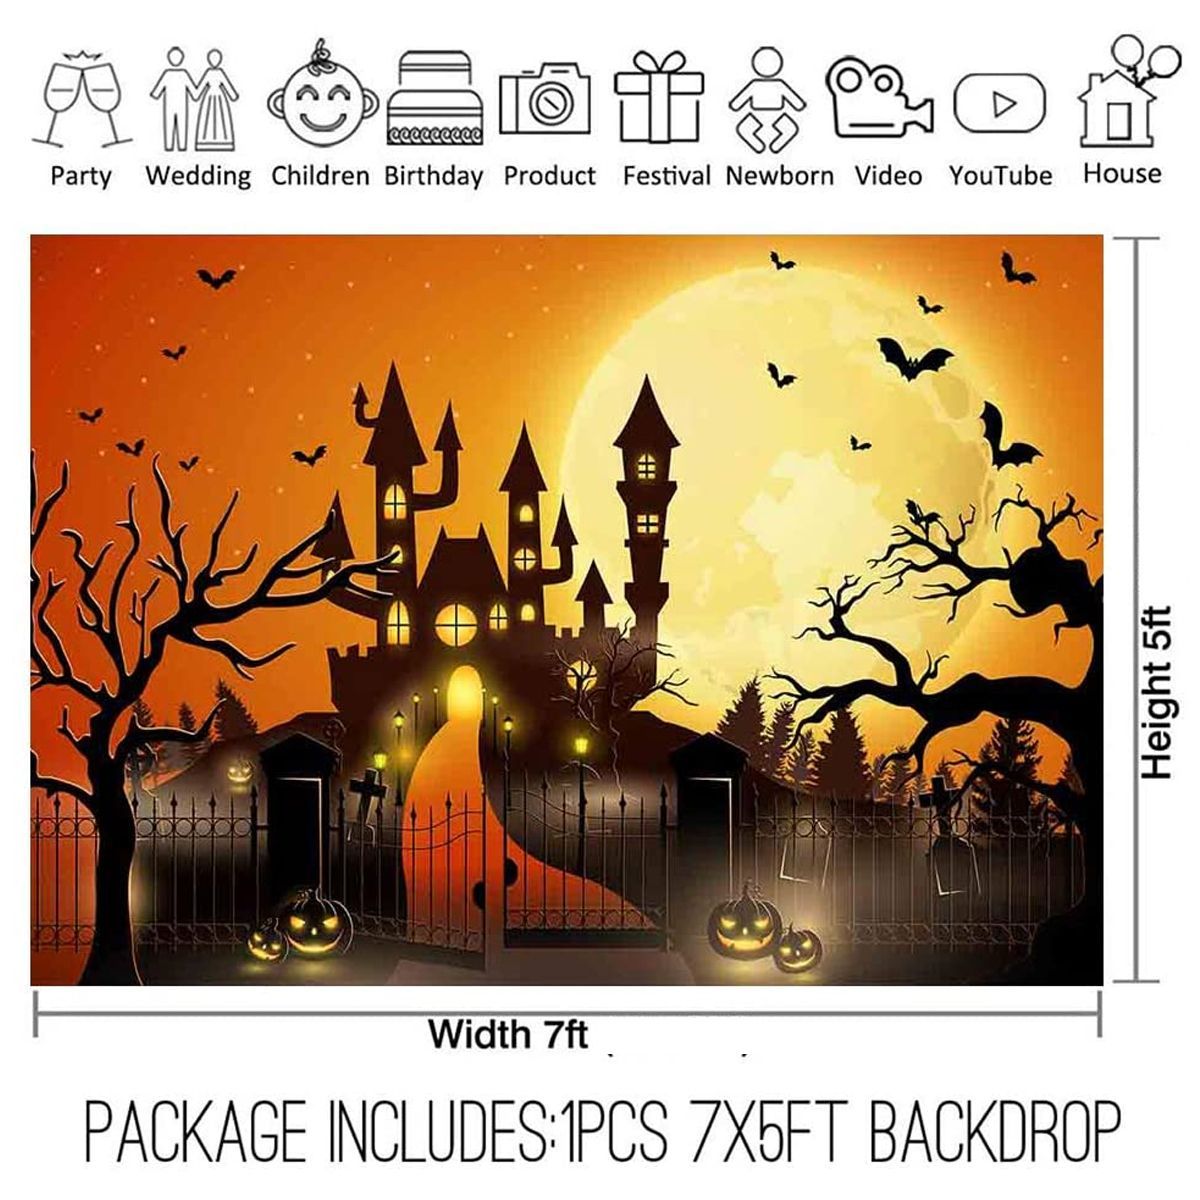 Halloween-Pumpkin-Castle-Moon-Party-Theme-Photography-Background-Cloth-1723785